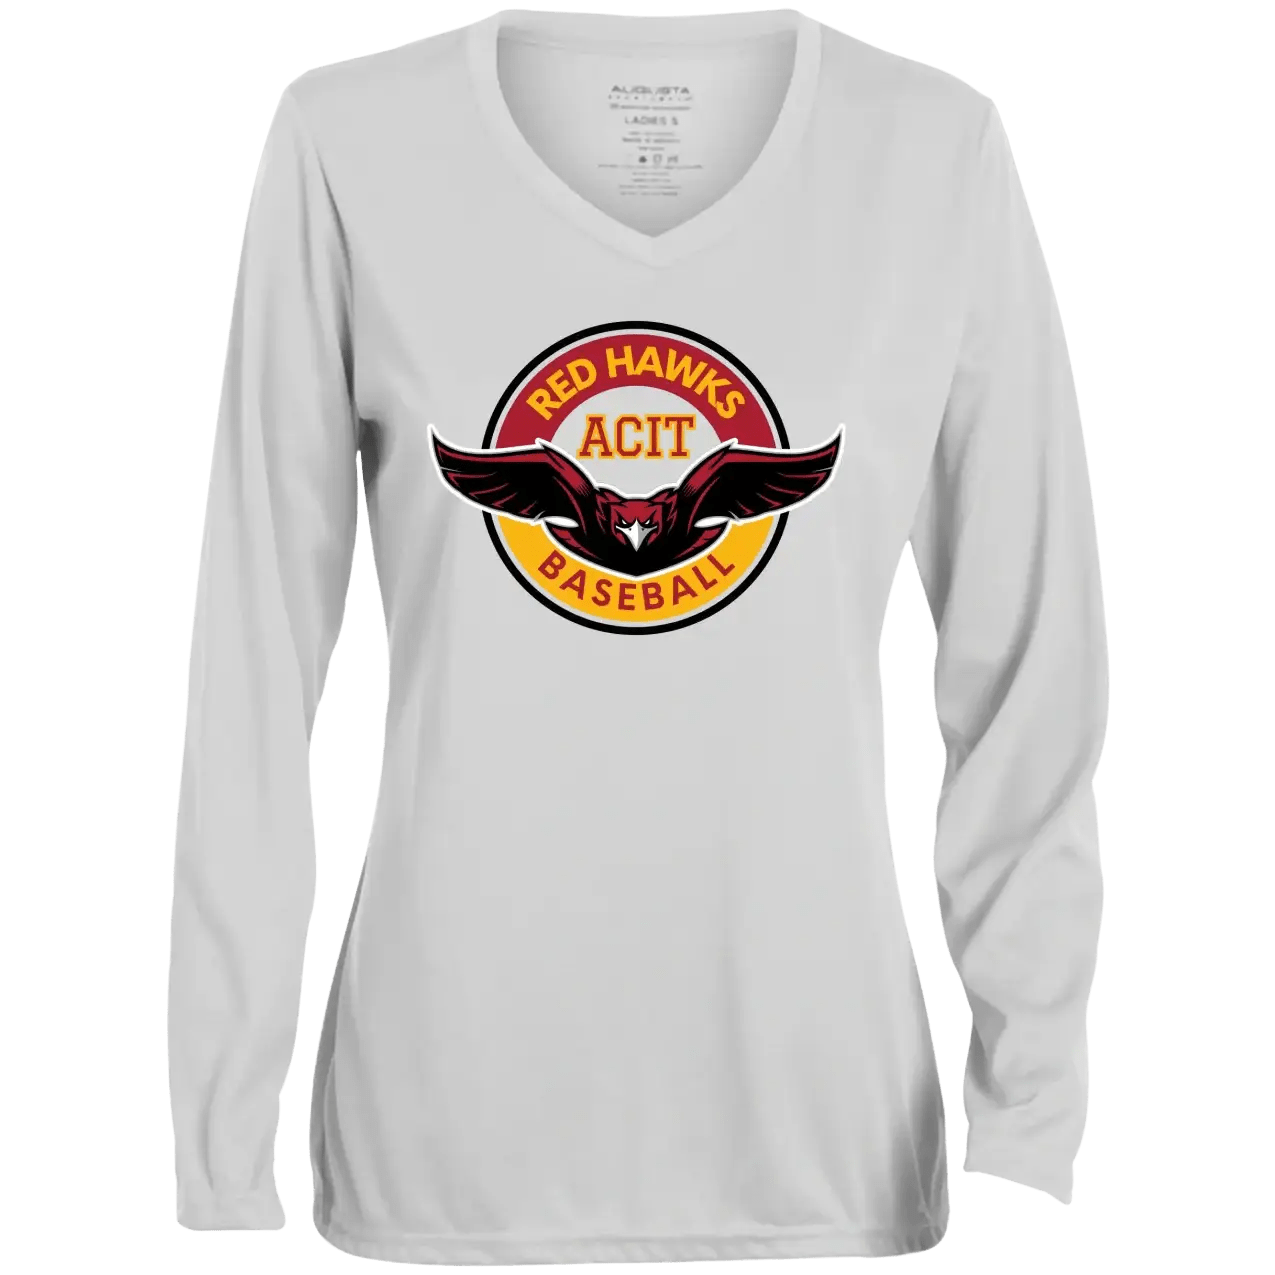 ACIT Baseball Long Sleeve Tees (Men's and Women's Choices) - Shore Break Designs - Customizer